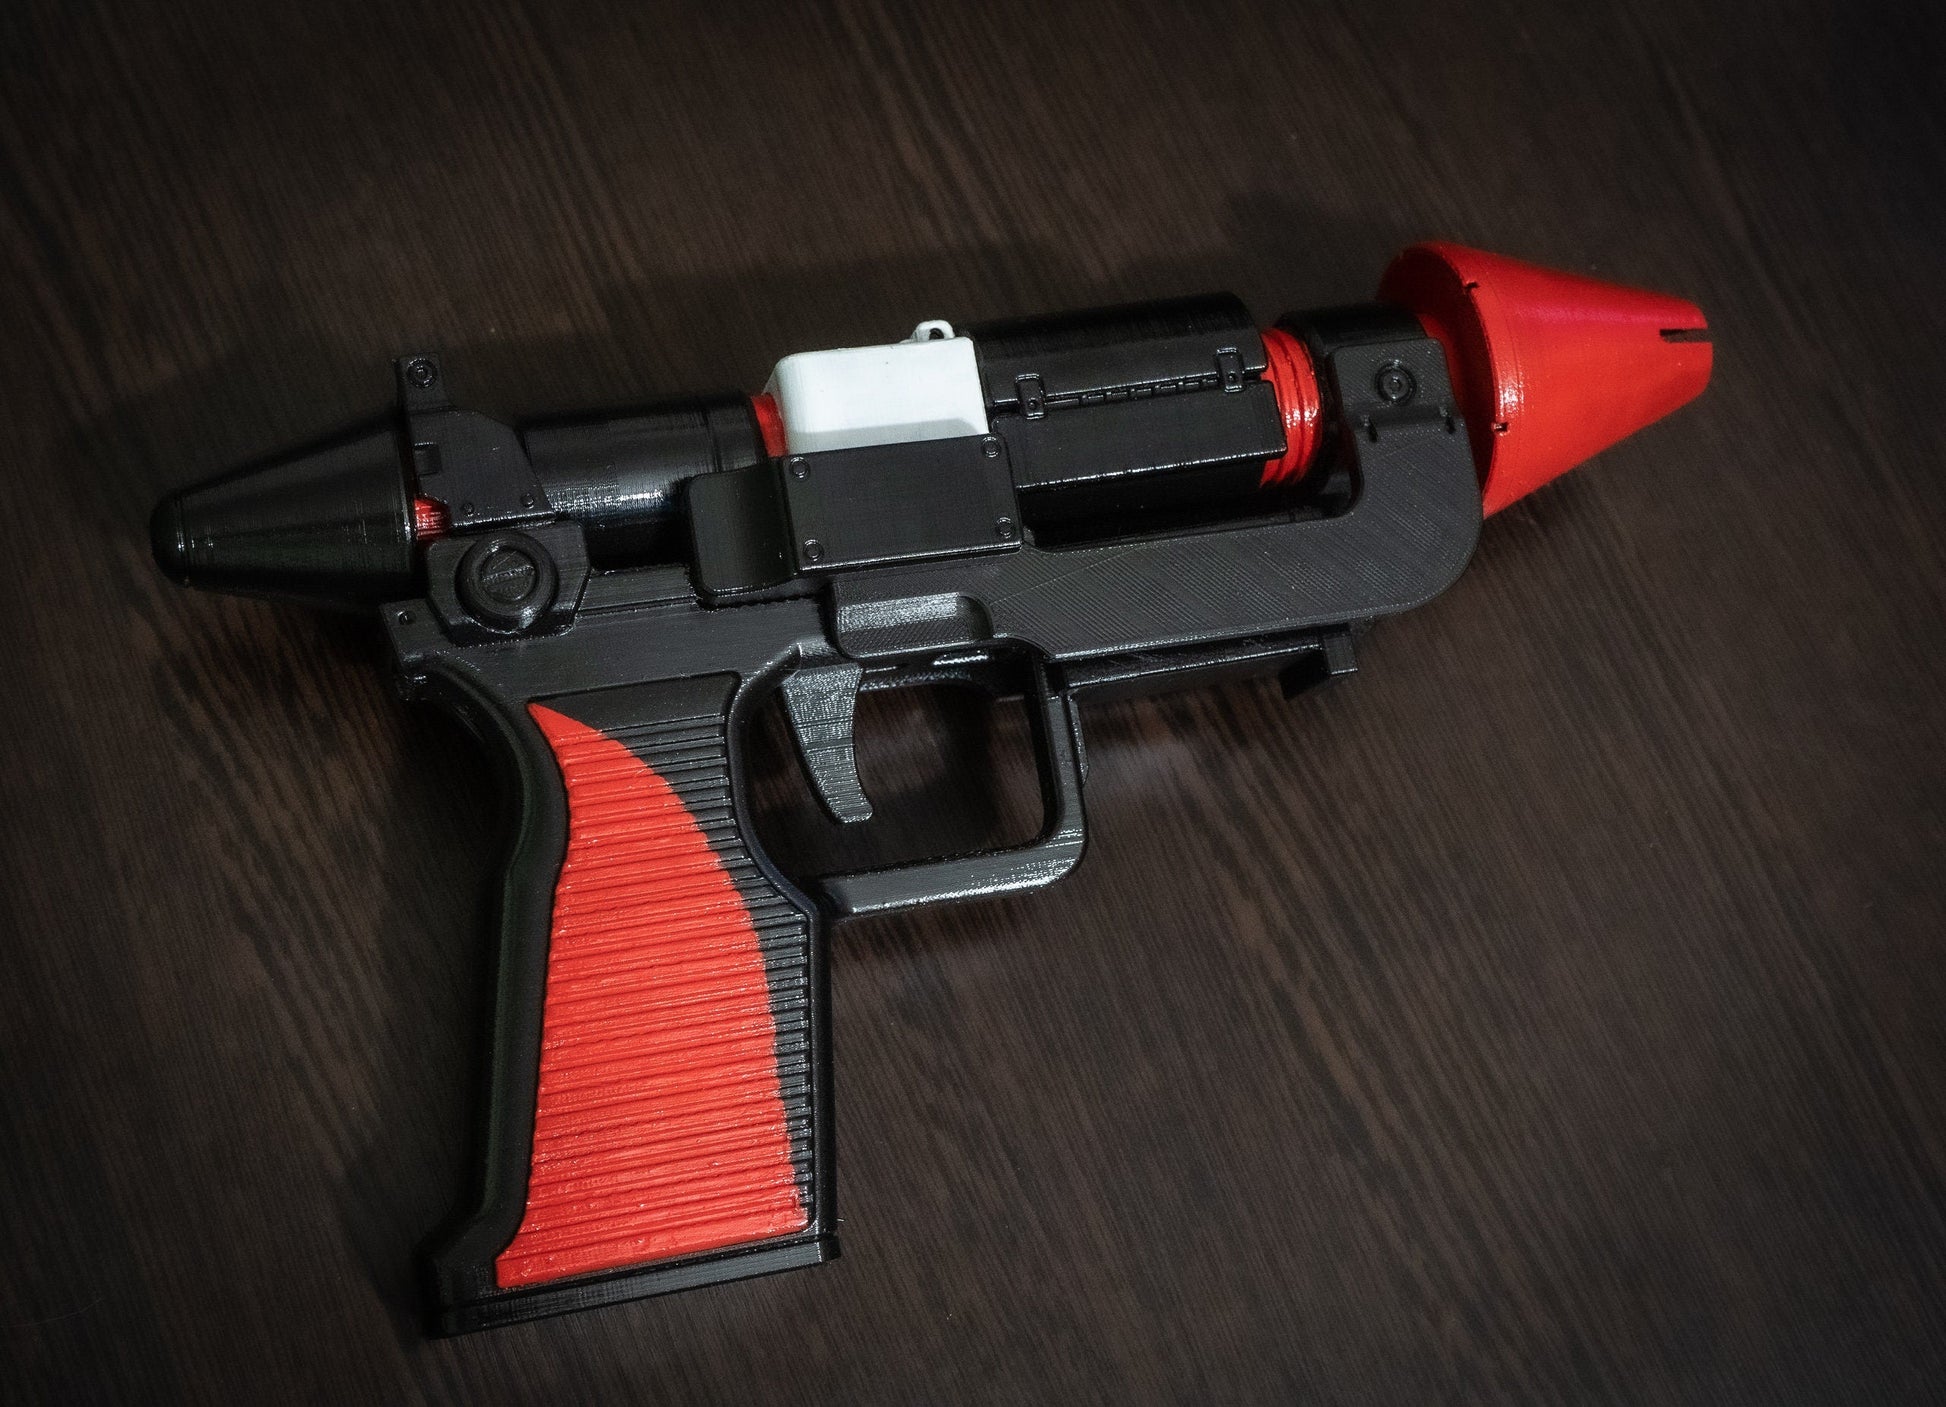 Major Baron Elrik Vonreg Blaster | RK-3 blaster pistol | Star Wars Props - 3DPrintProps